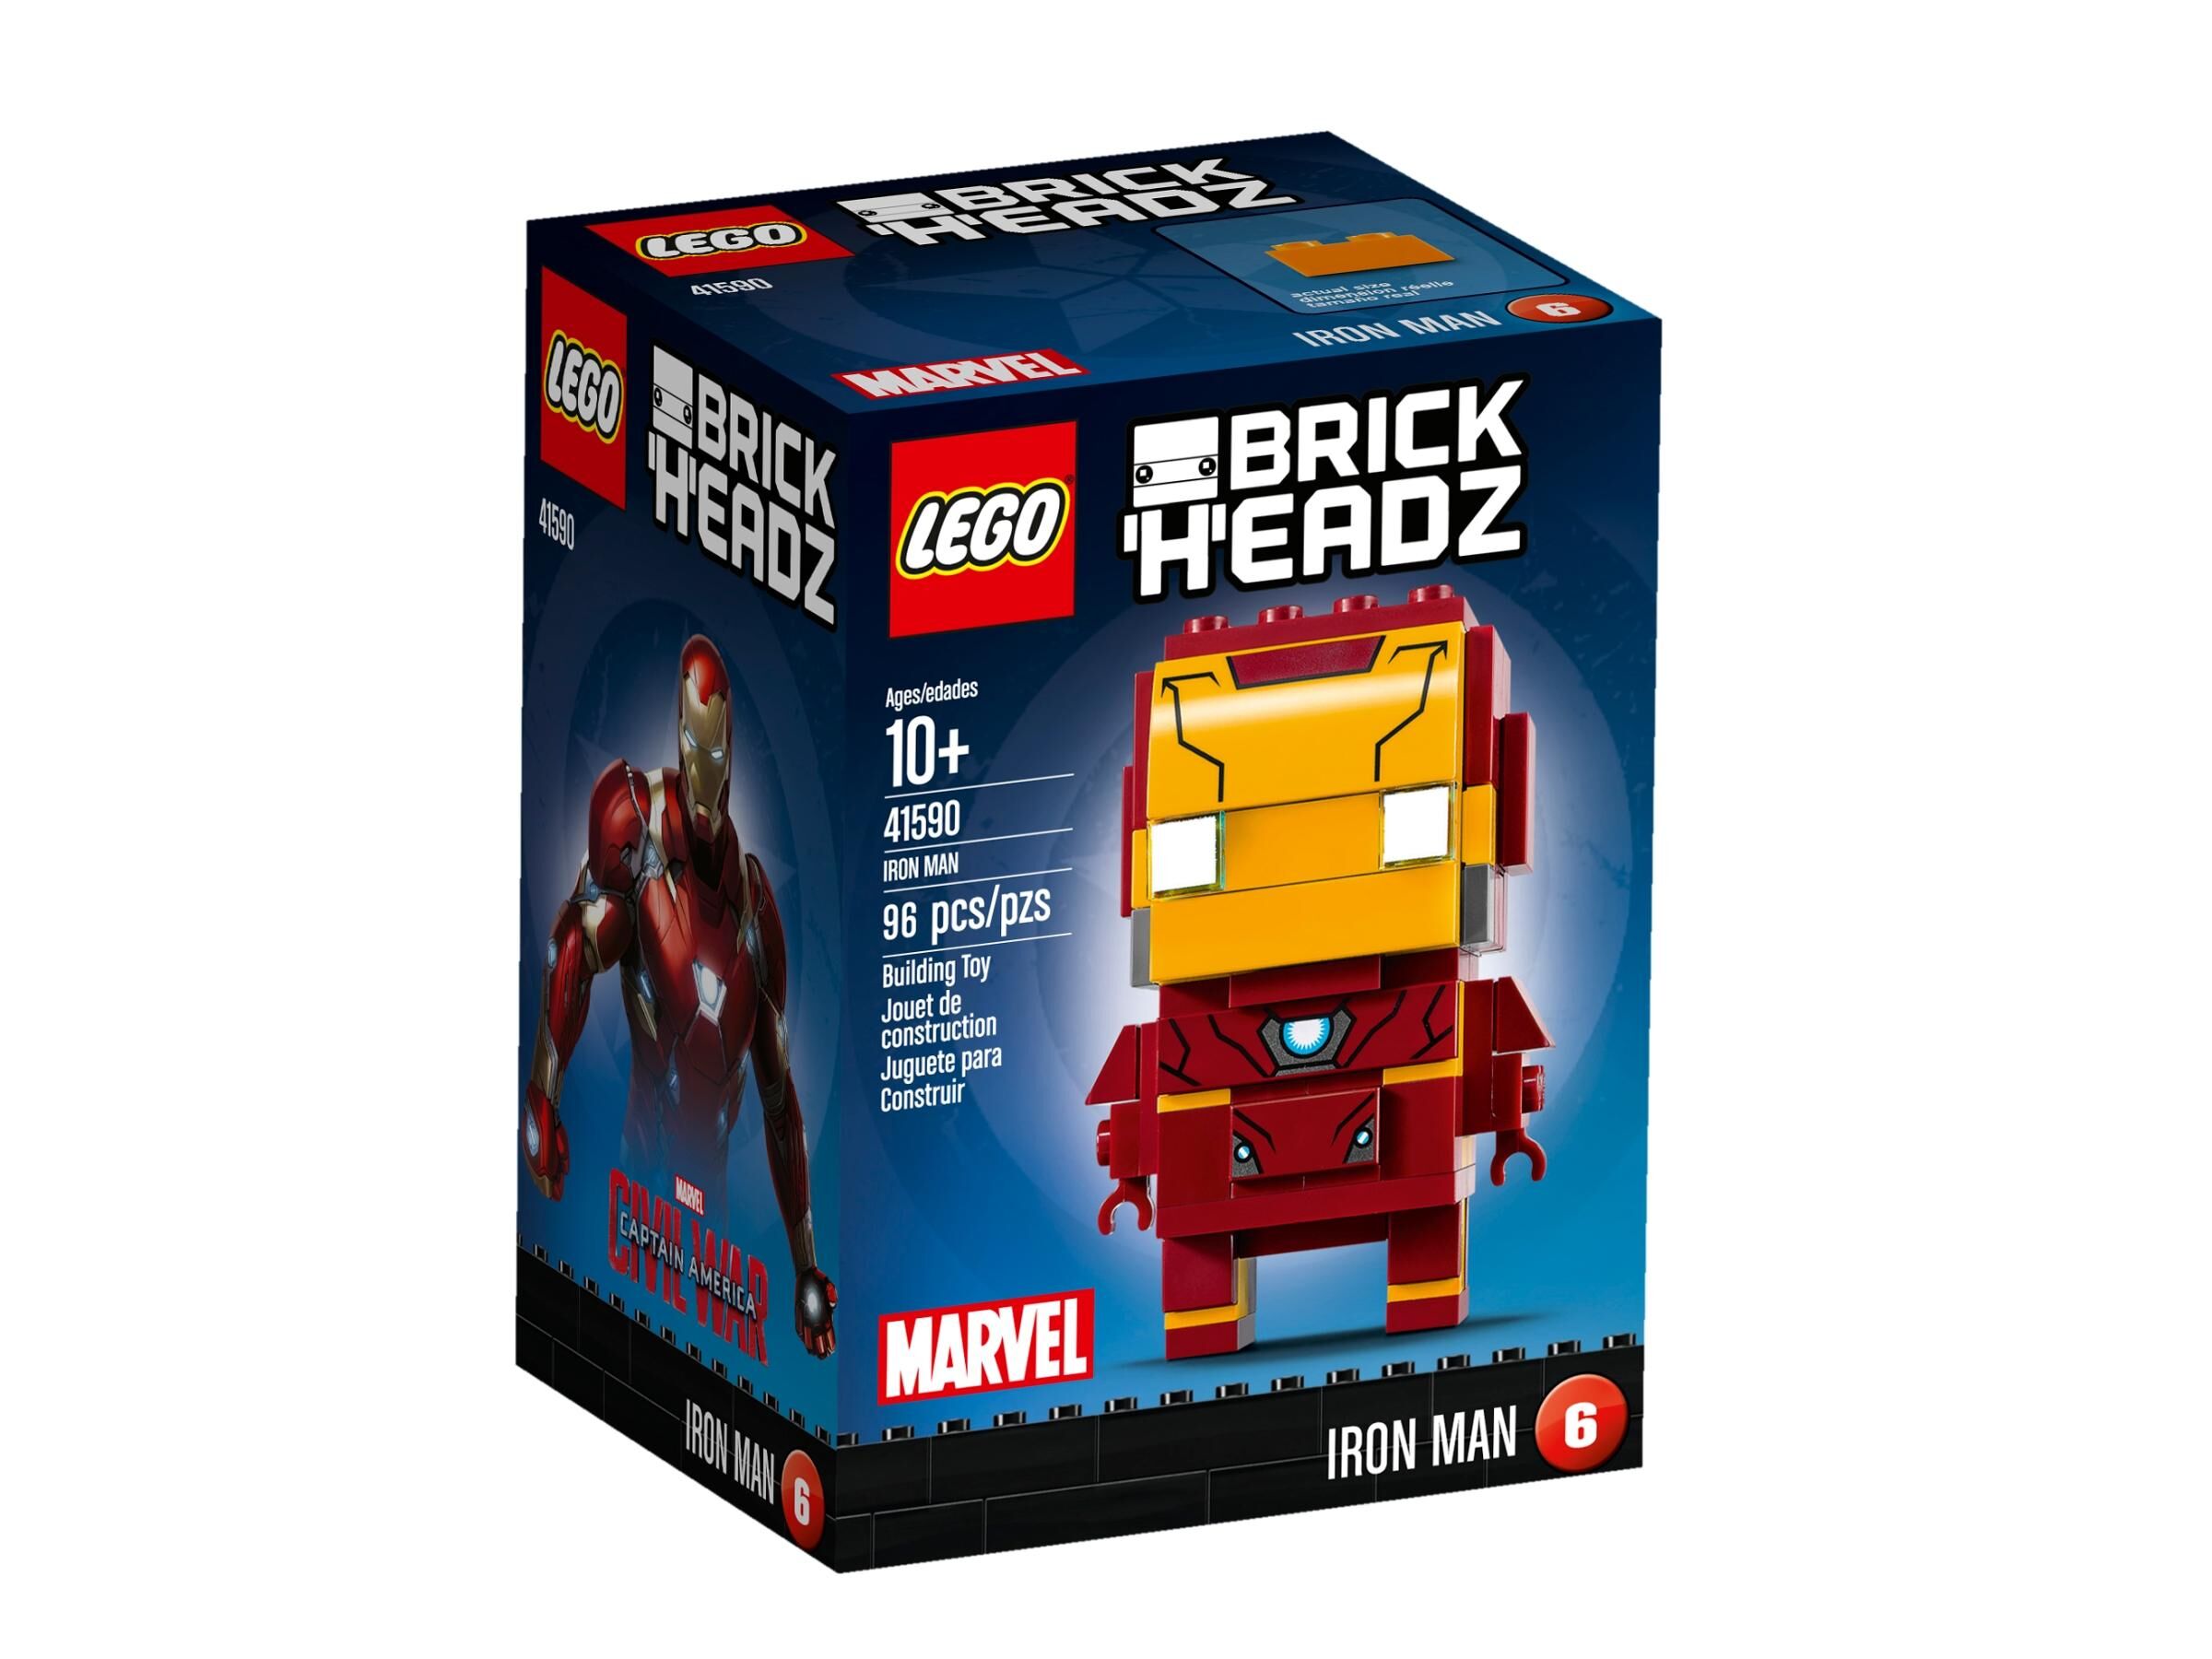 NEW LEGO BrickHeadz Iron Man 2017 41590 